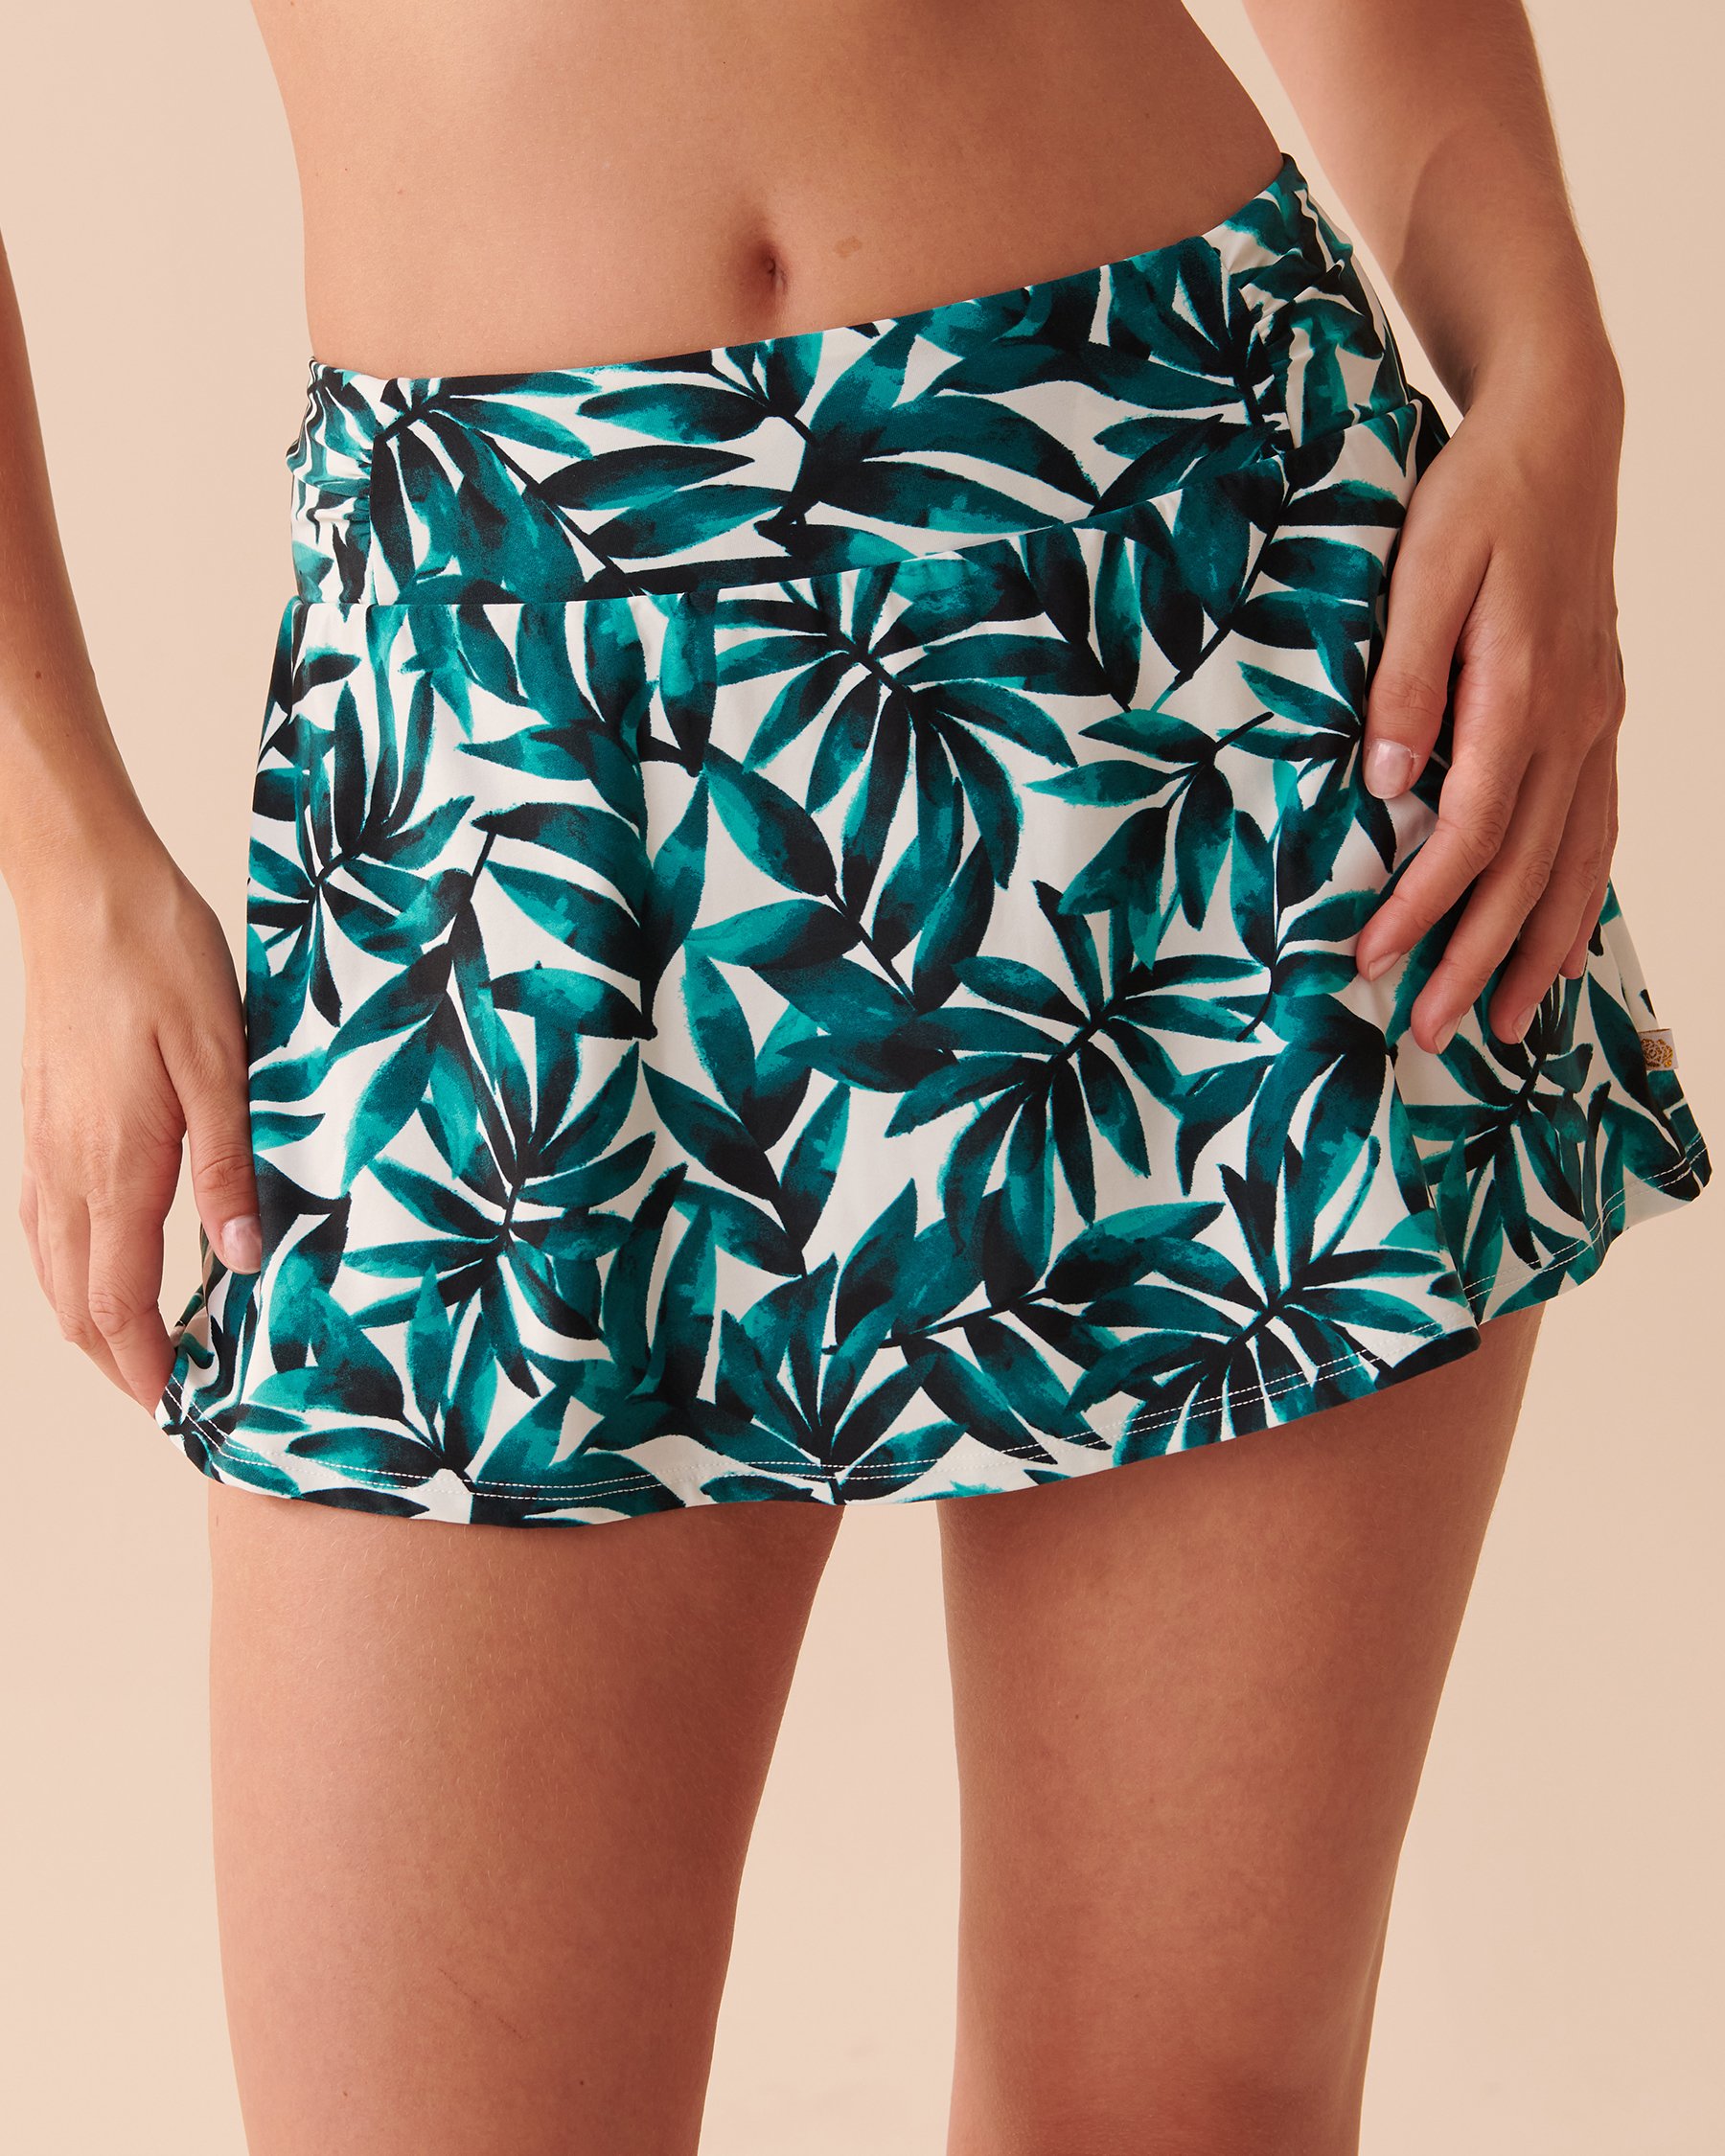 LA VIE EN ROSE AQUA ARUBA Skirt Bikini Bottom Blue tropical leaves 70300500 - View1